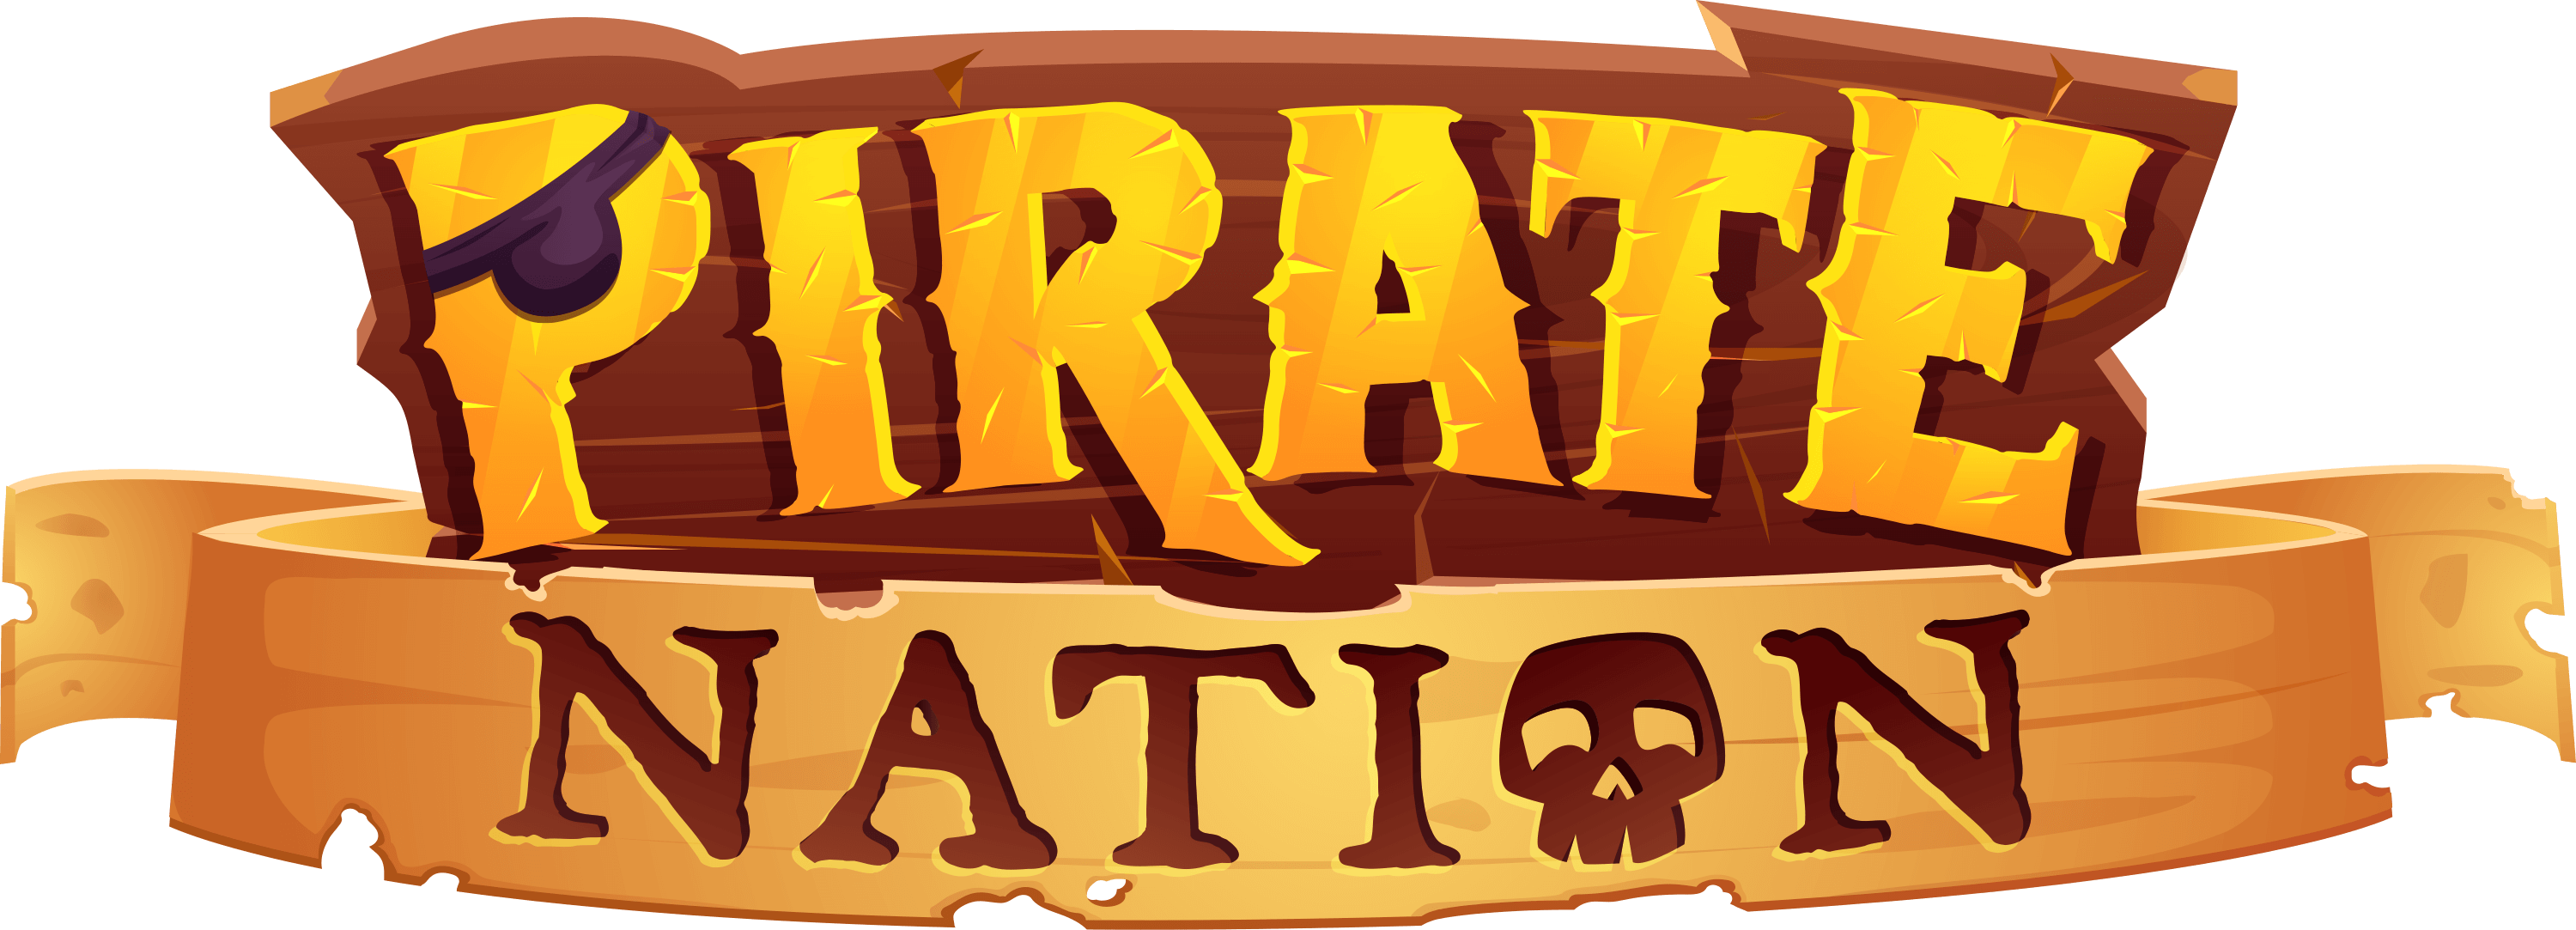 pirate nation logo.png